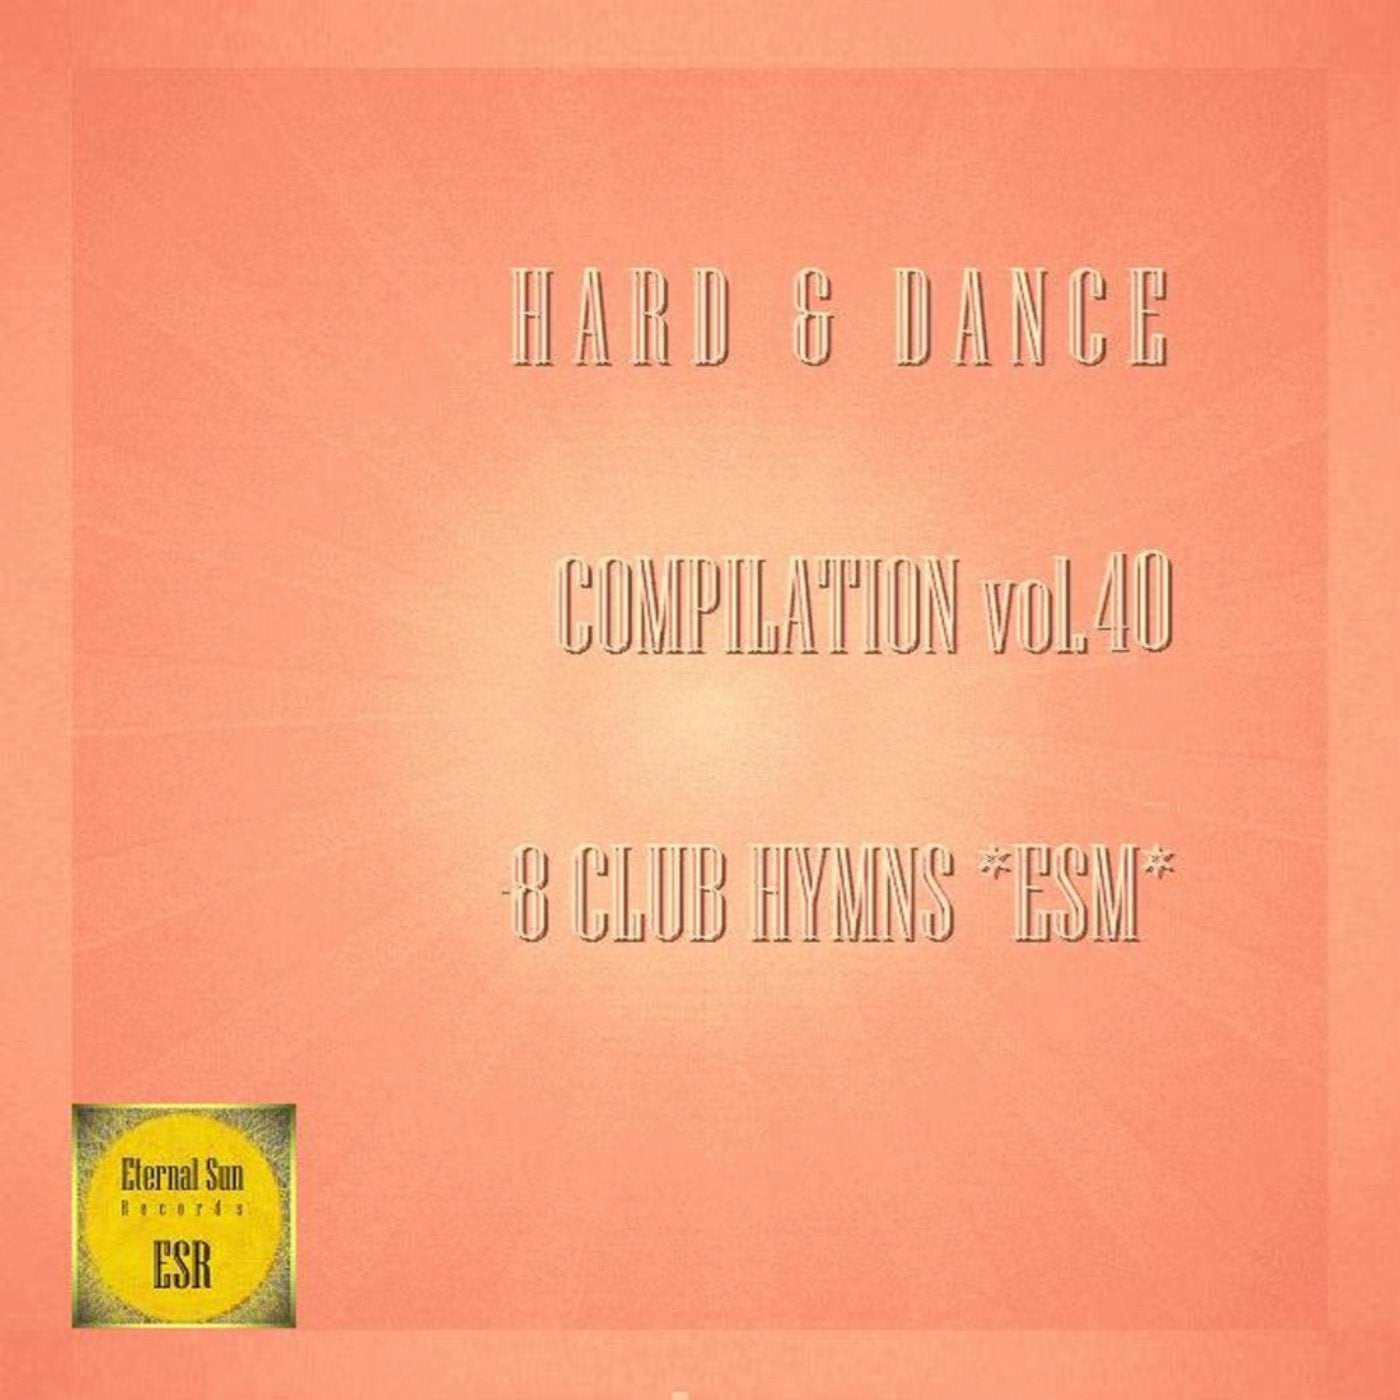 Hard & Dance Compilation vol.40 - 8 Club Hymns ESM